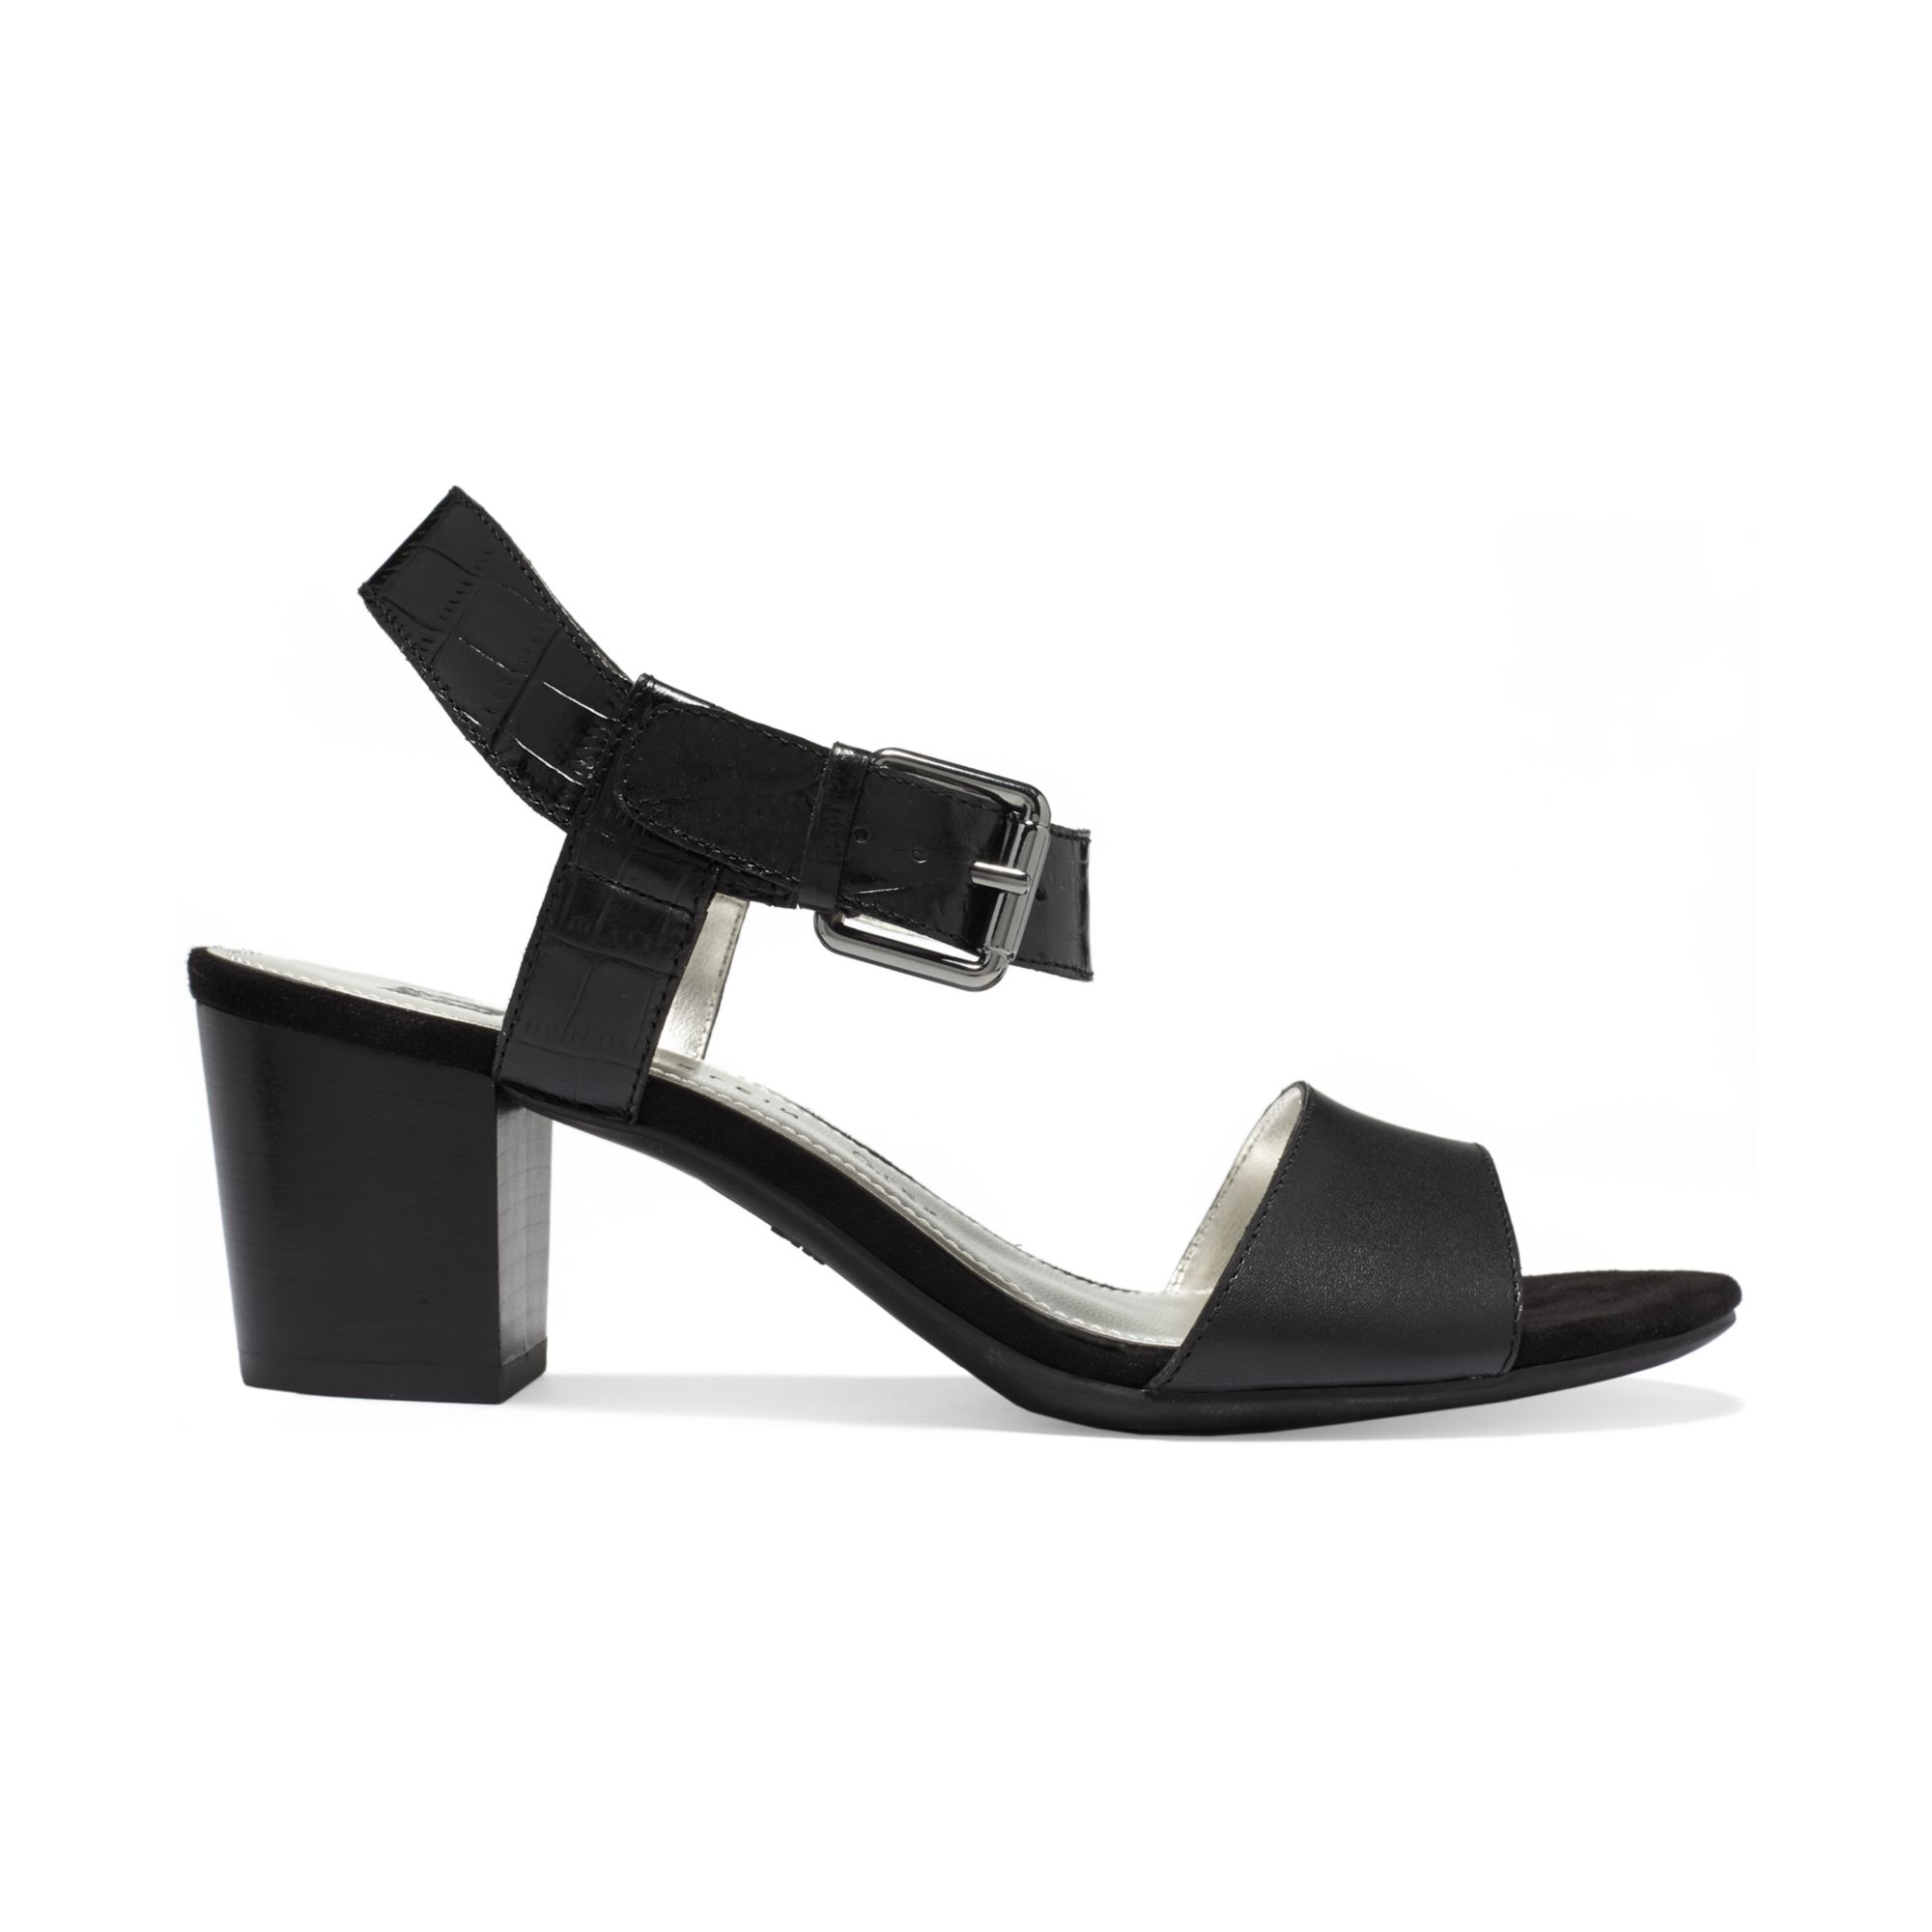 Lyst - Anne Klein Petrona Block Heel Sandals in Black